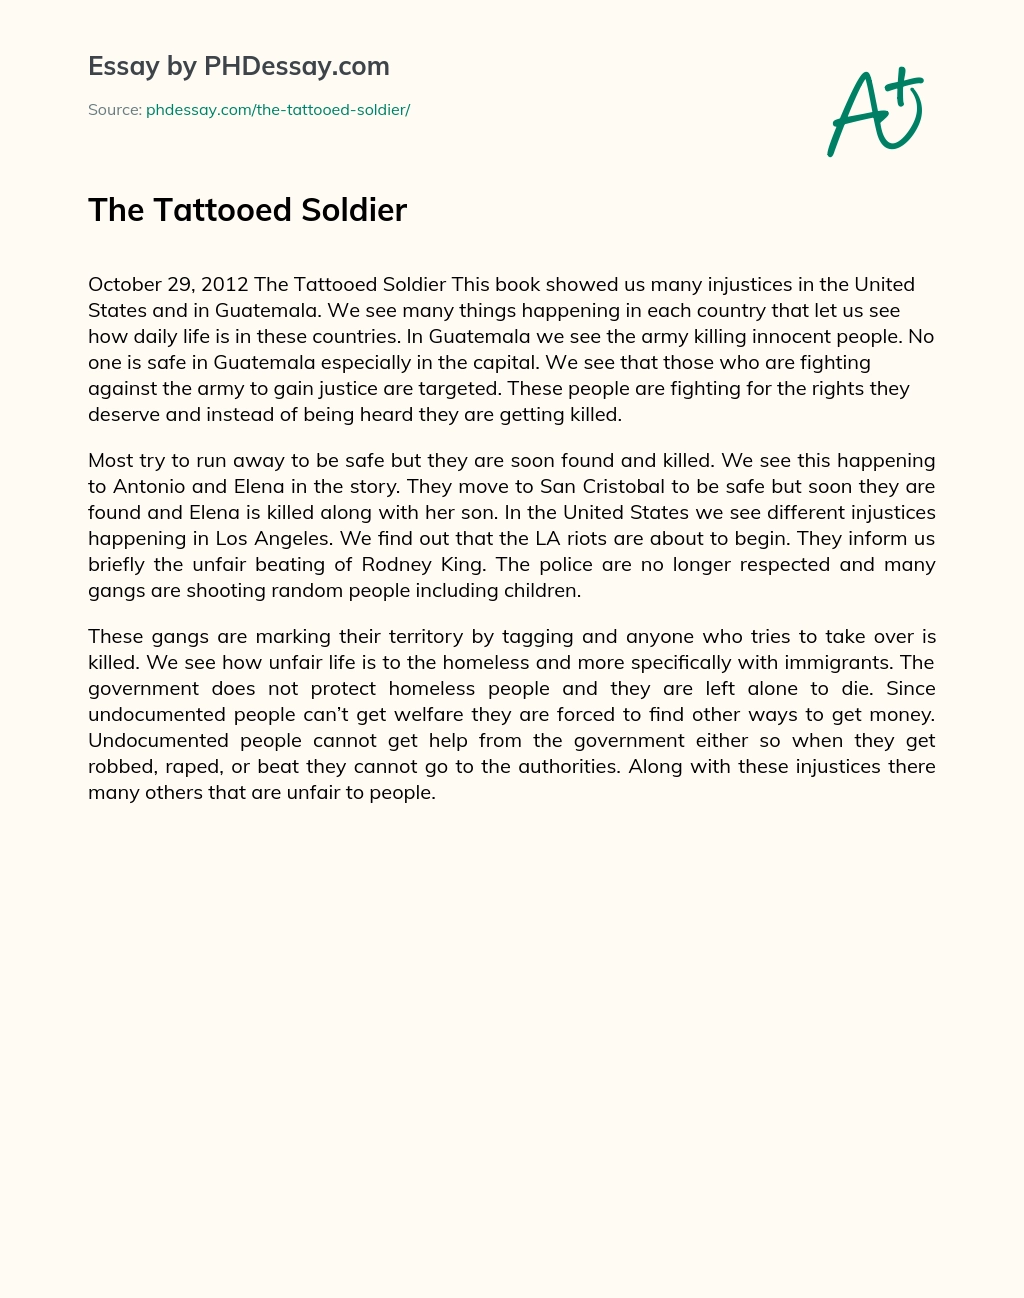 The Tattooed Soldier essay